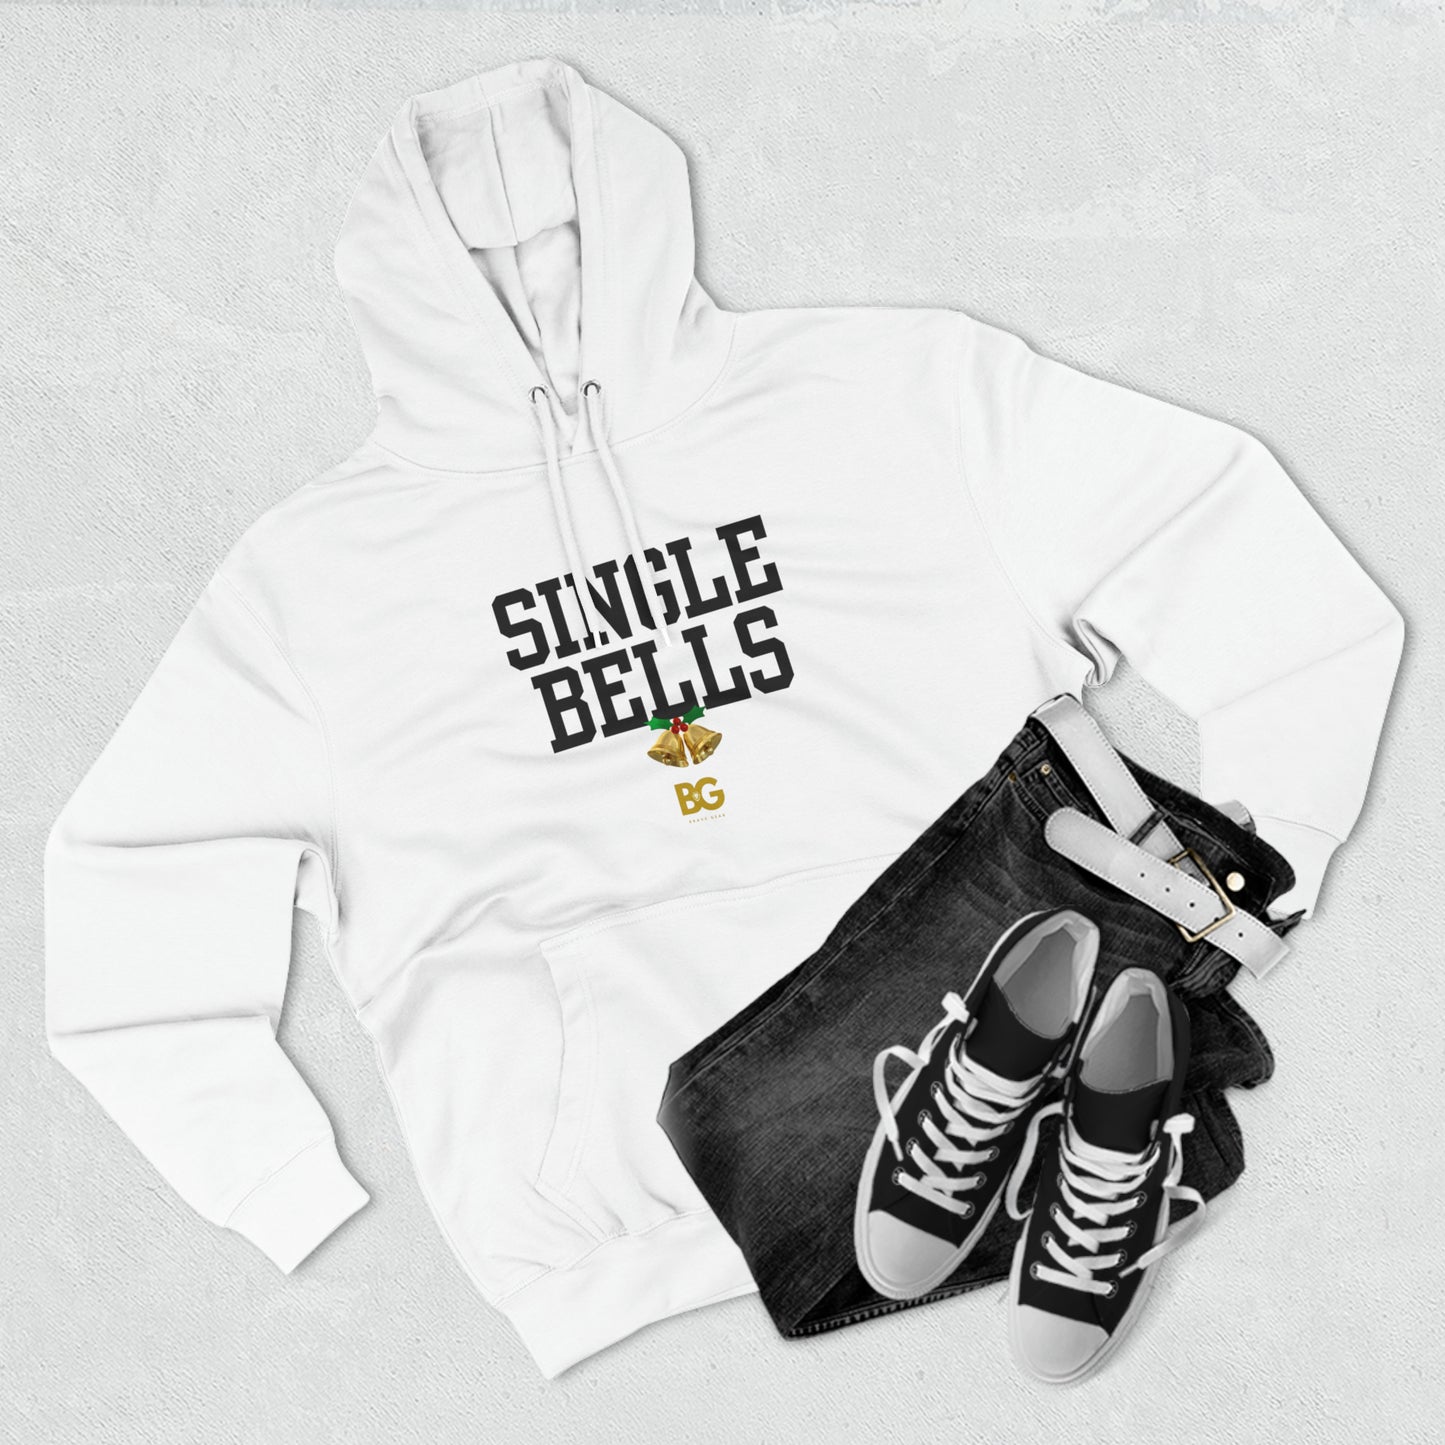 BG "Single Bells" Premium Pullover Hoodie